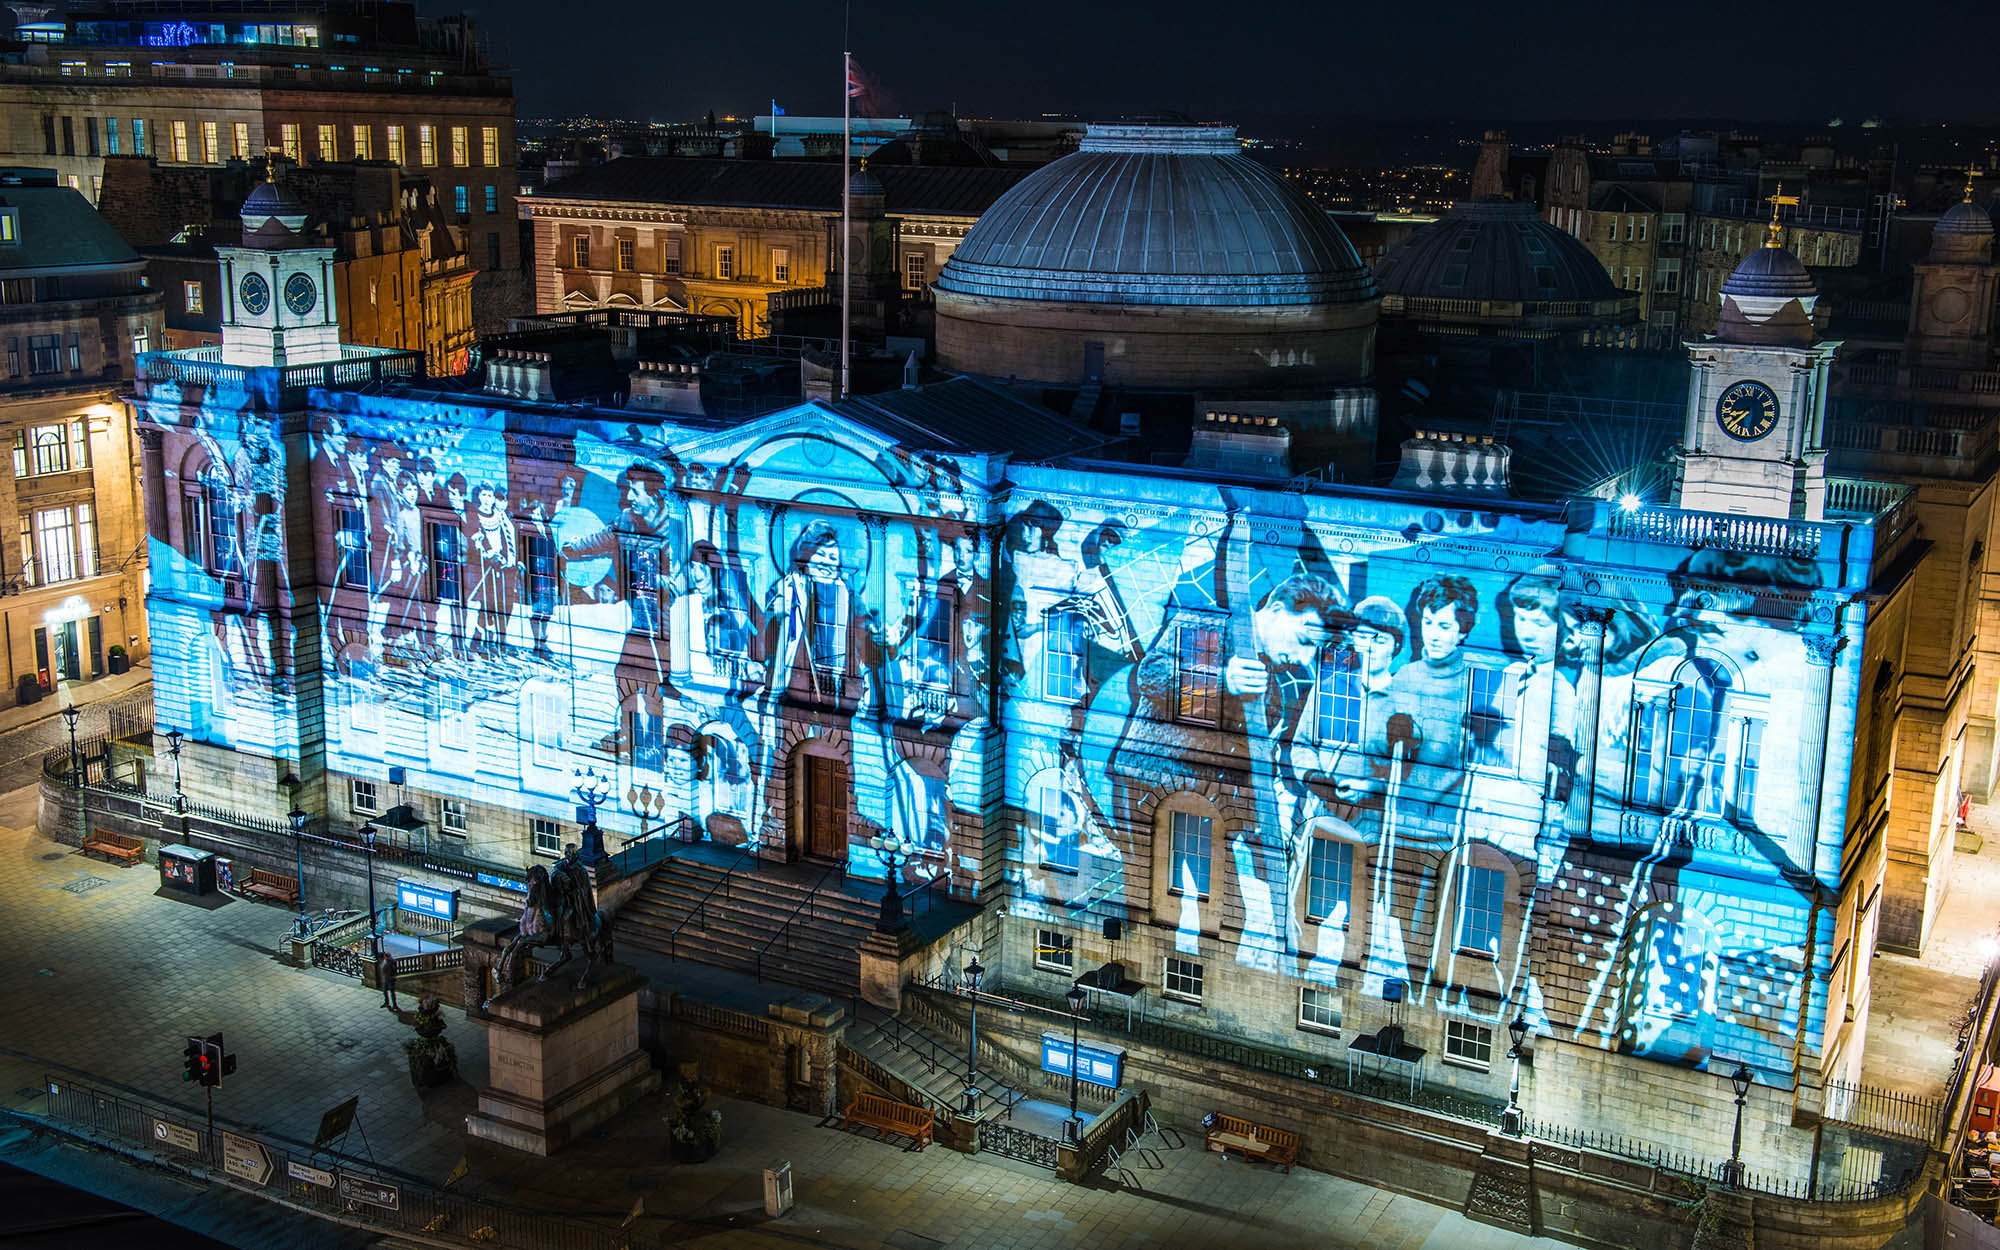 Edinburgh's Giant Advent Calendar Christmas projections on Register House